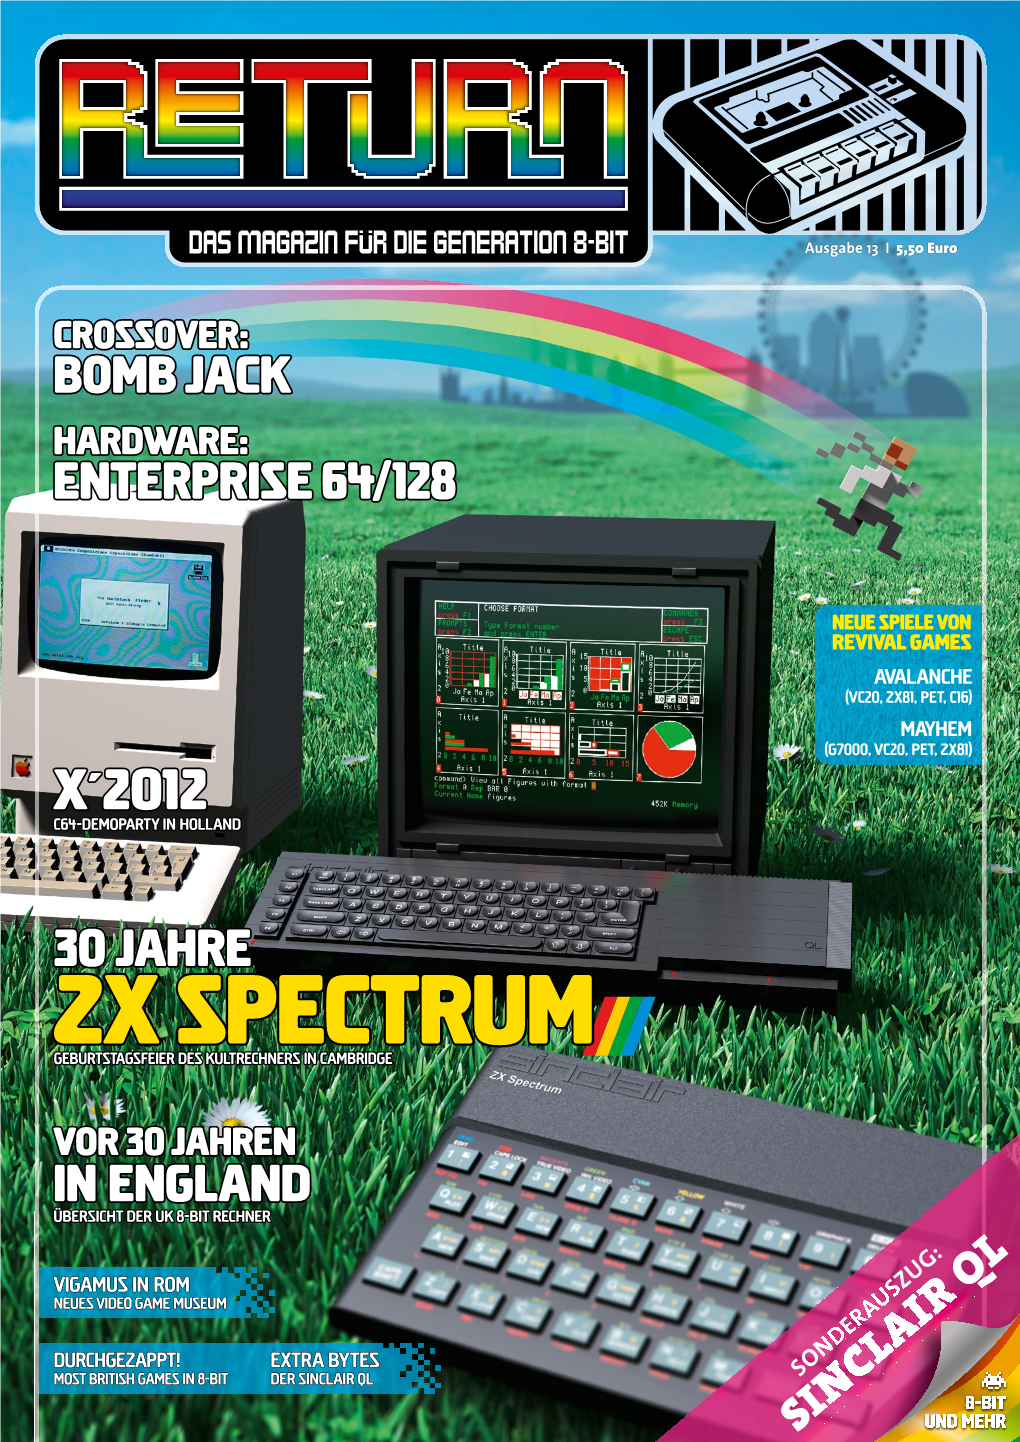 ZX Spectrumdes Kultrechners in Cambridge